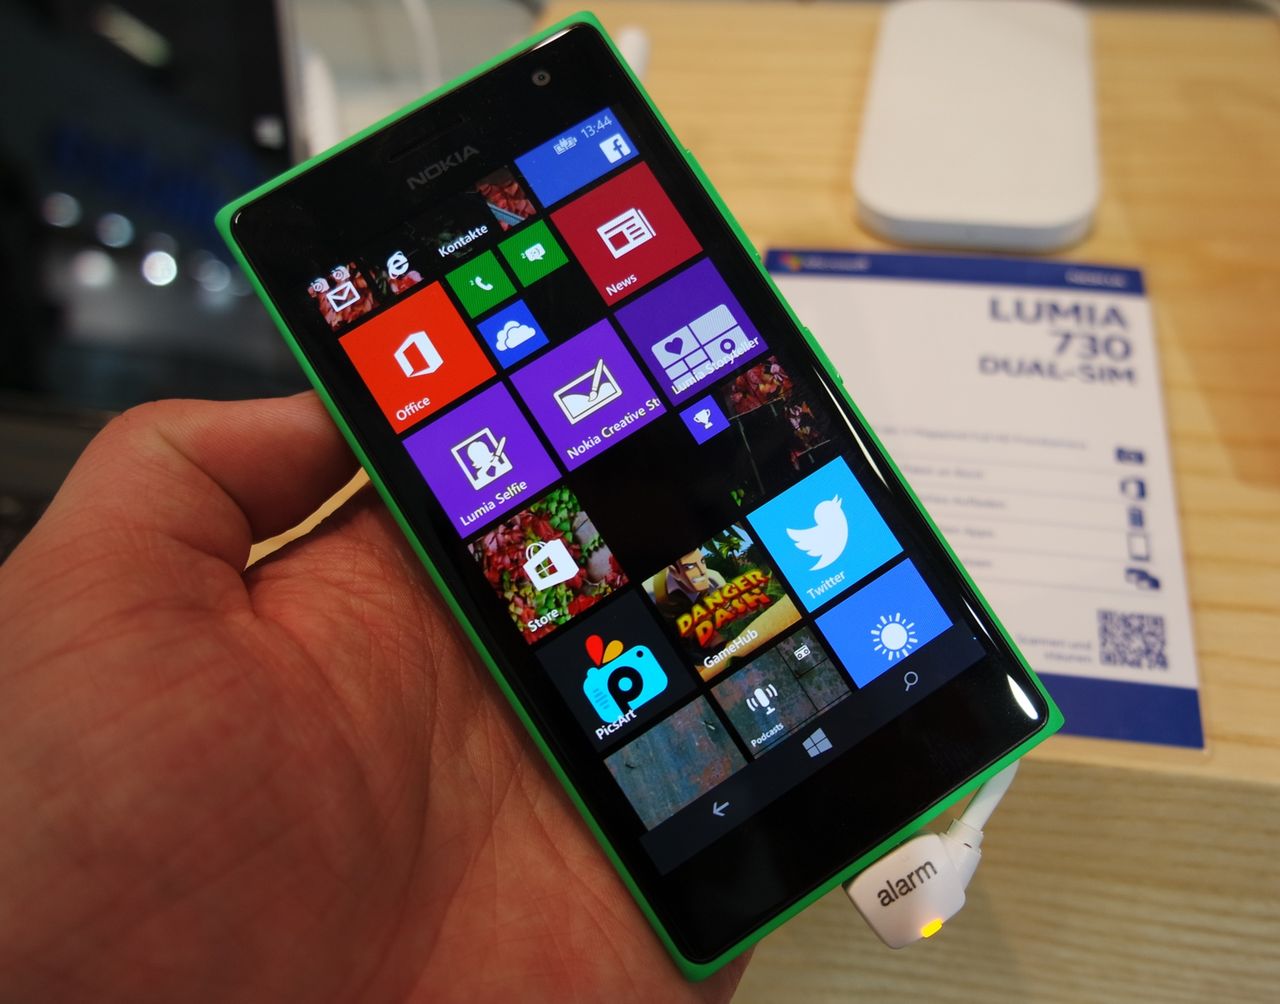 Lumia 730 Dual SIM